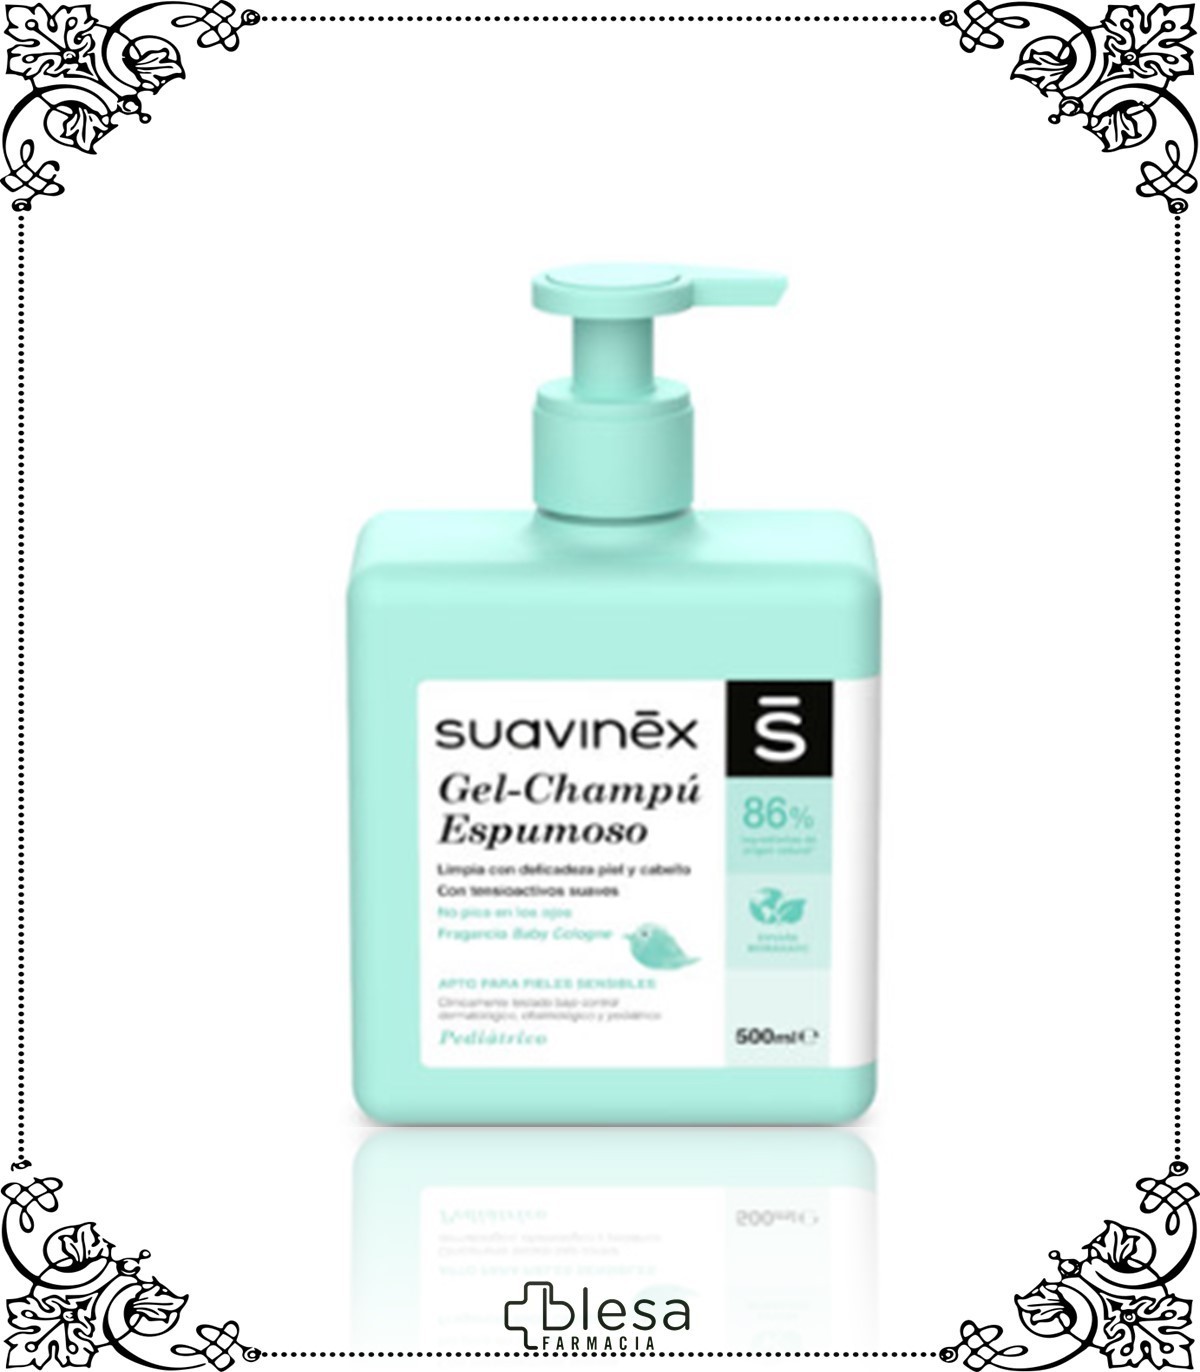 Suavinex cosmético gel-champú espumoso 500 ml - Blesa Farmacia